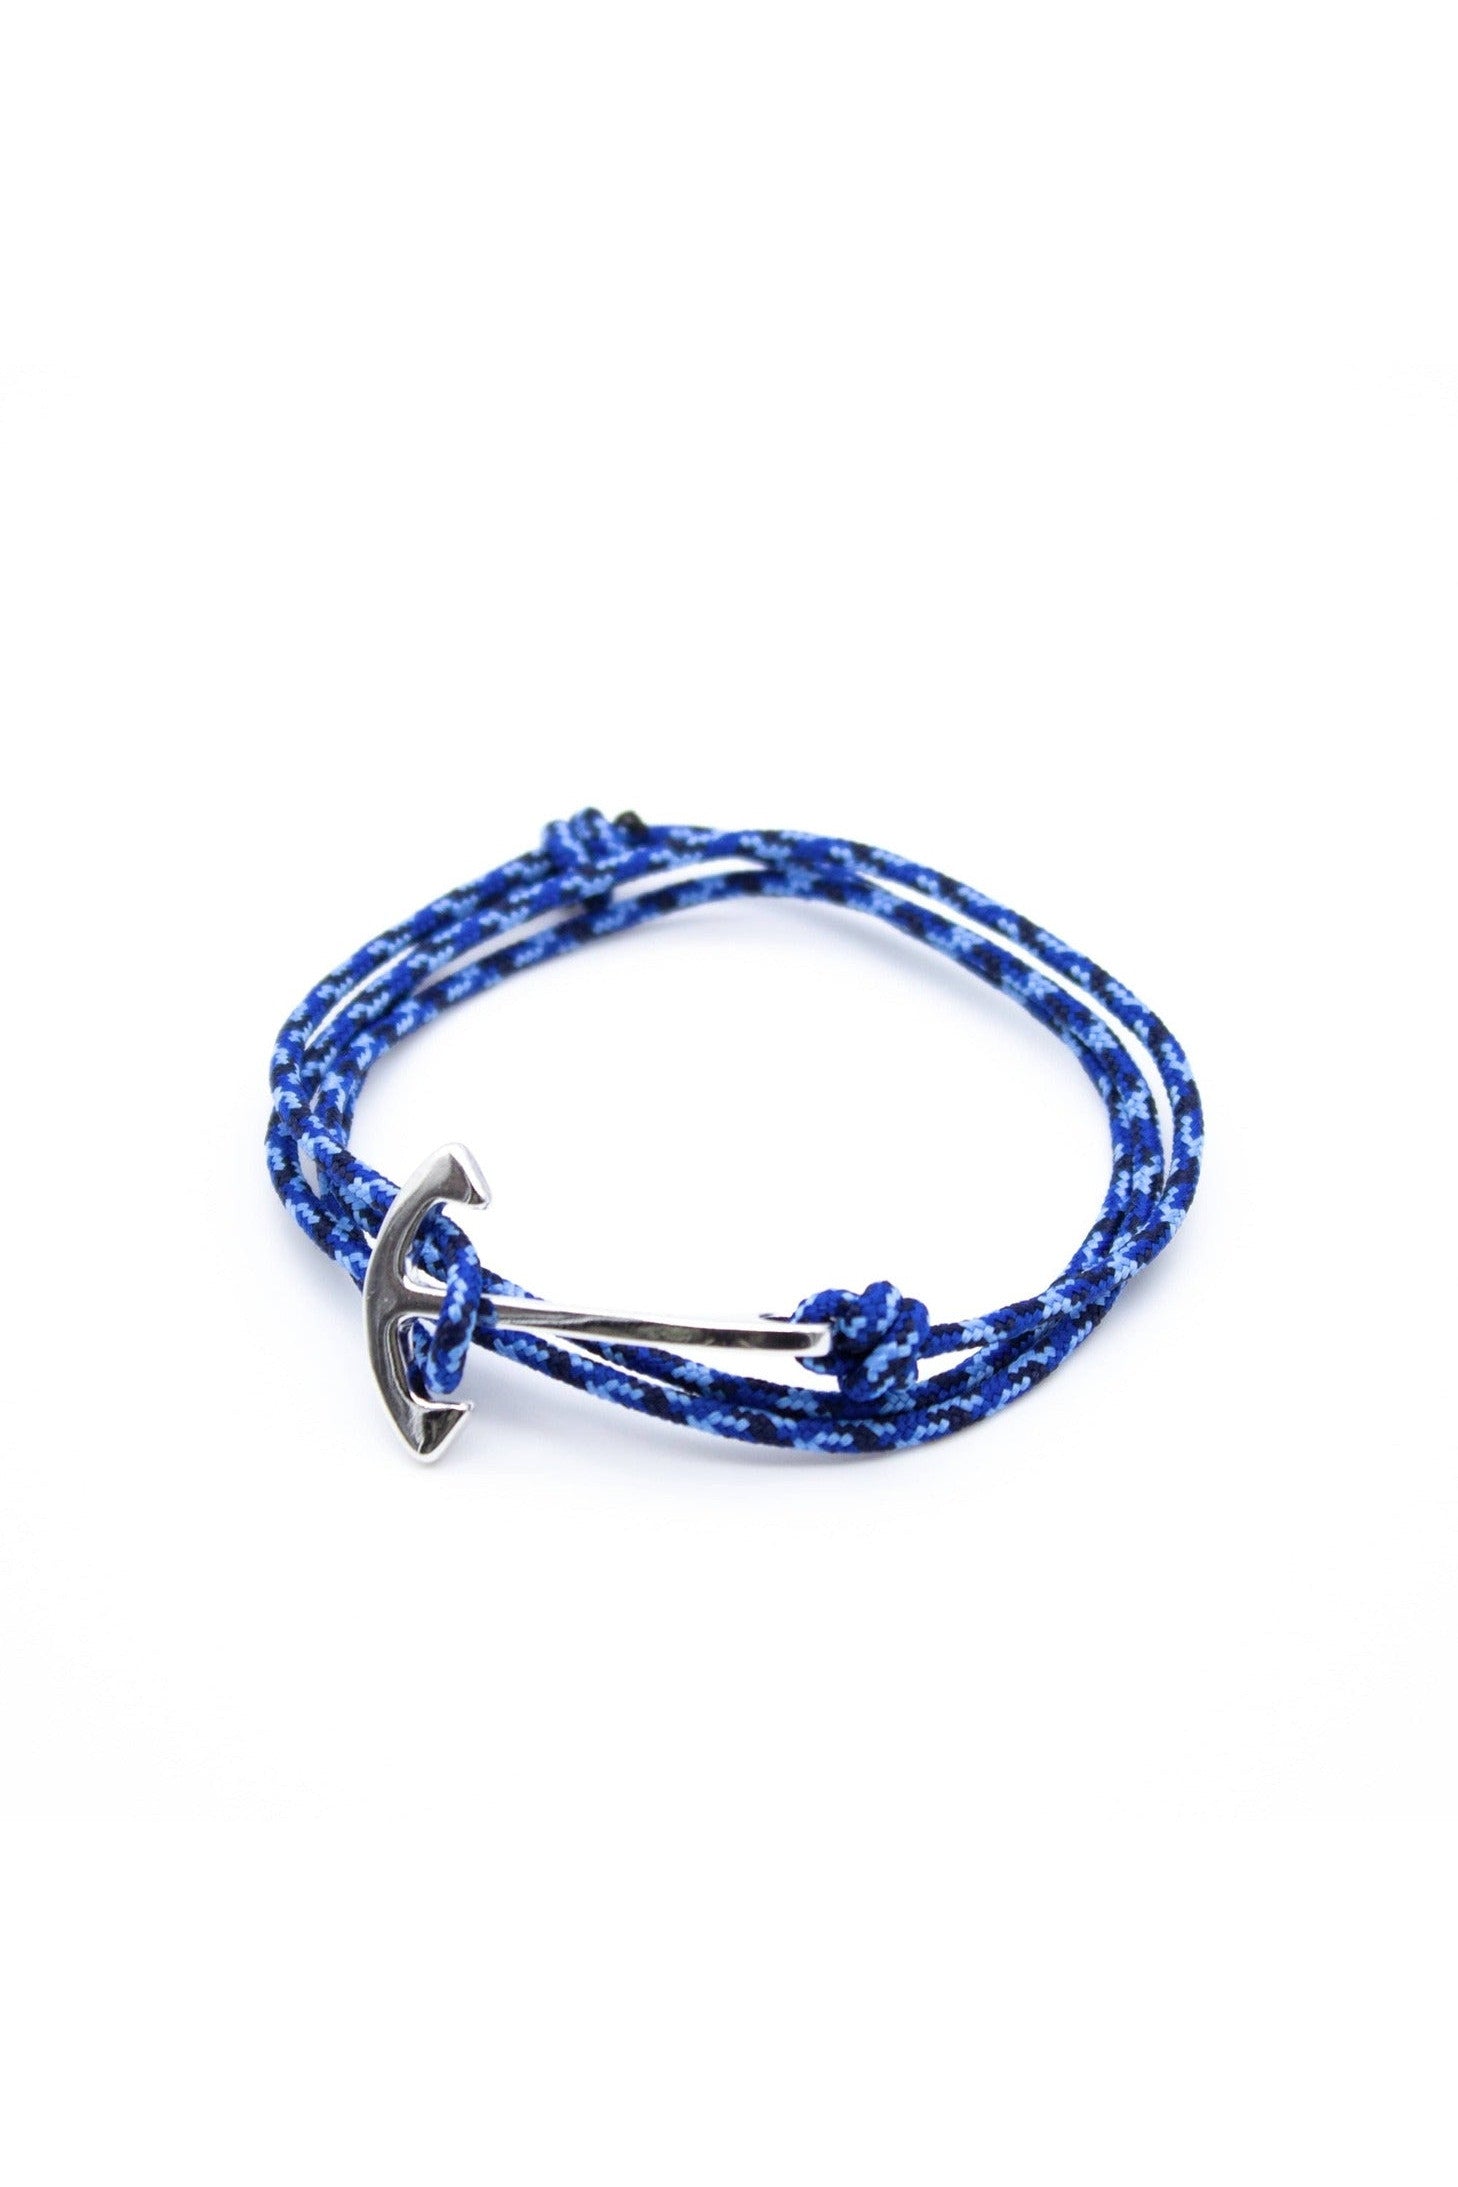 Camo Blue Men's Bracelet With Silver Anchor - Stolen Riches